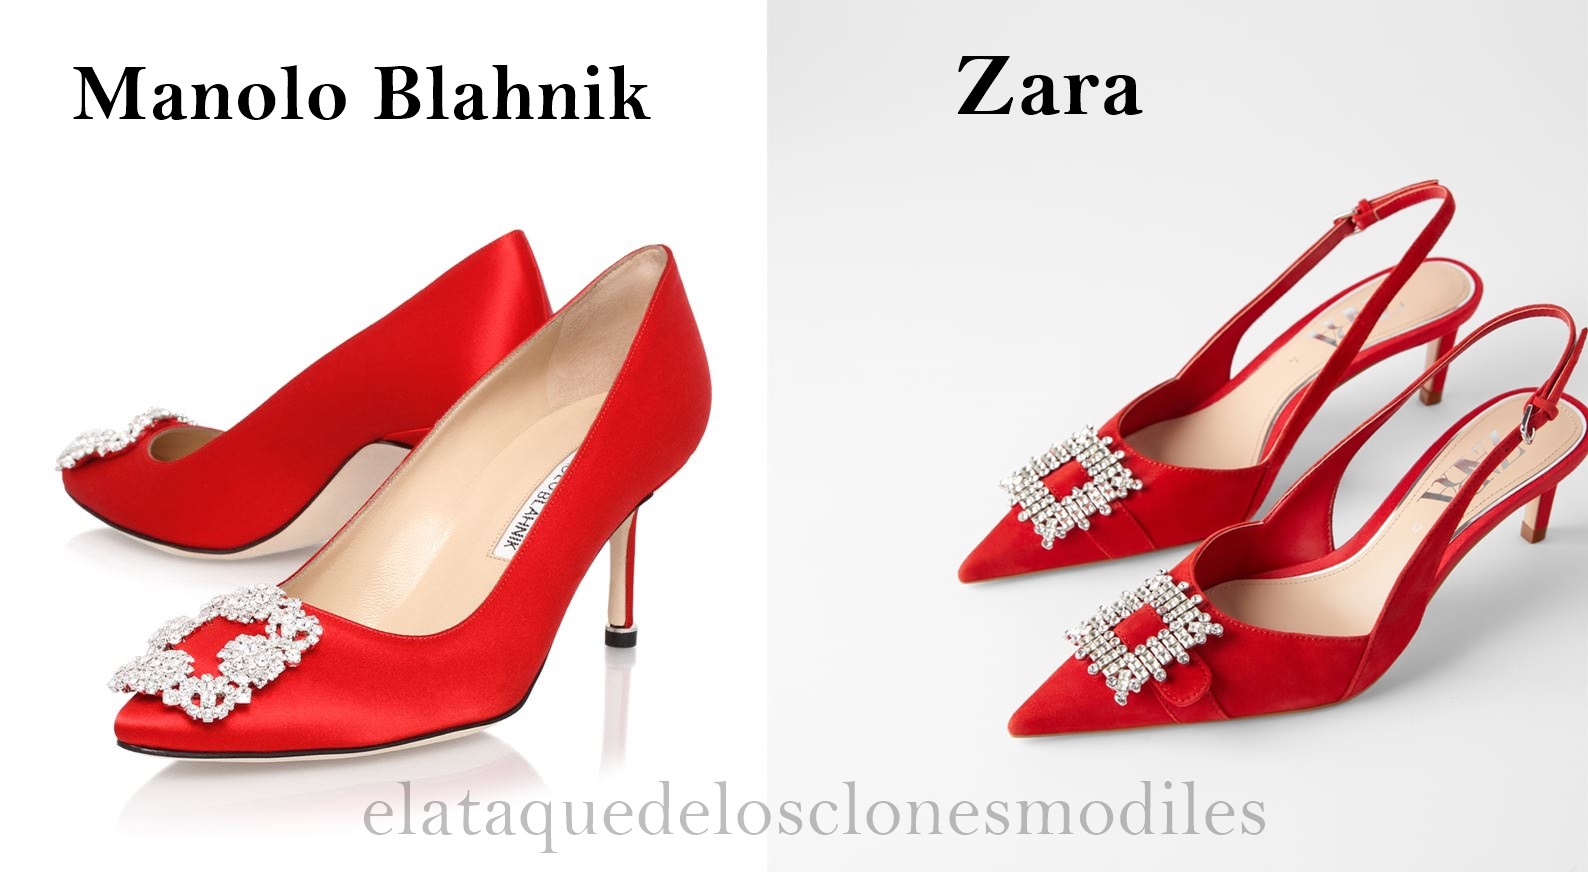 lealtad travesura Contrato Clon zapatos rojos Manolo Blahnik, por Zara